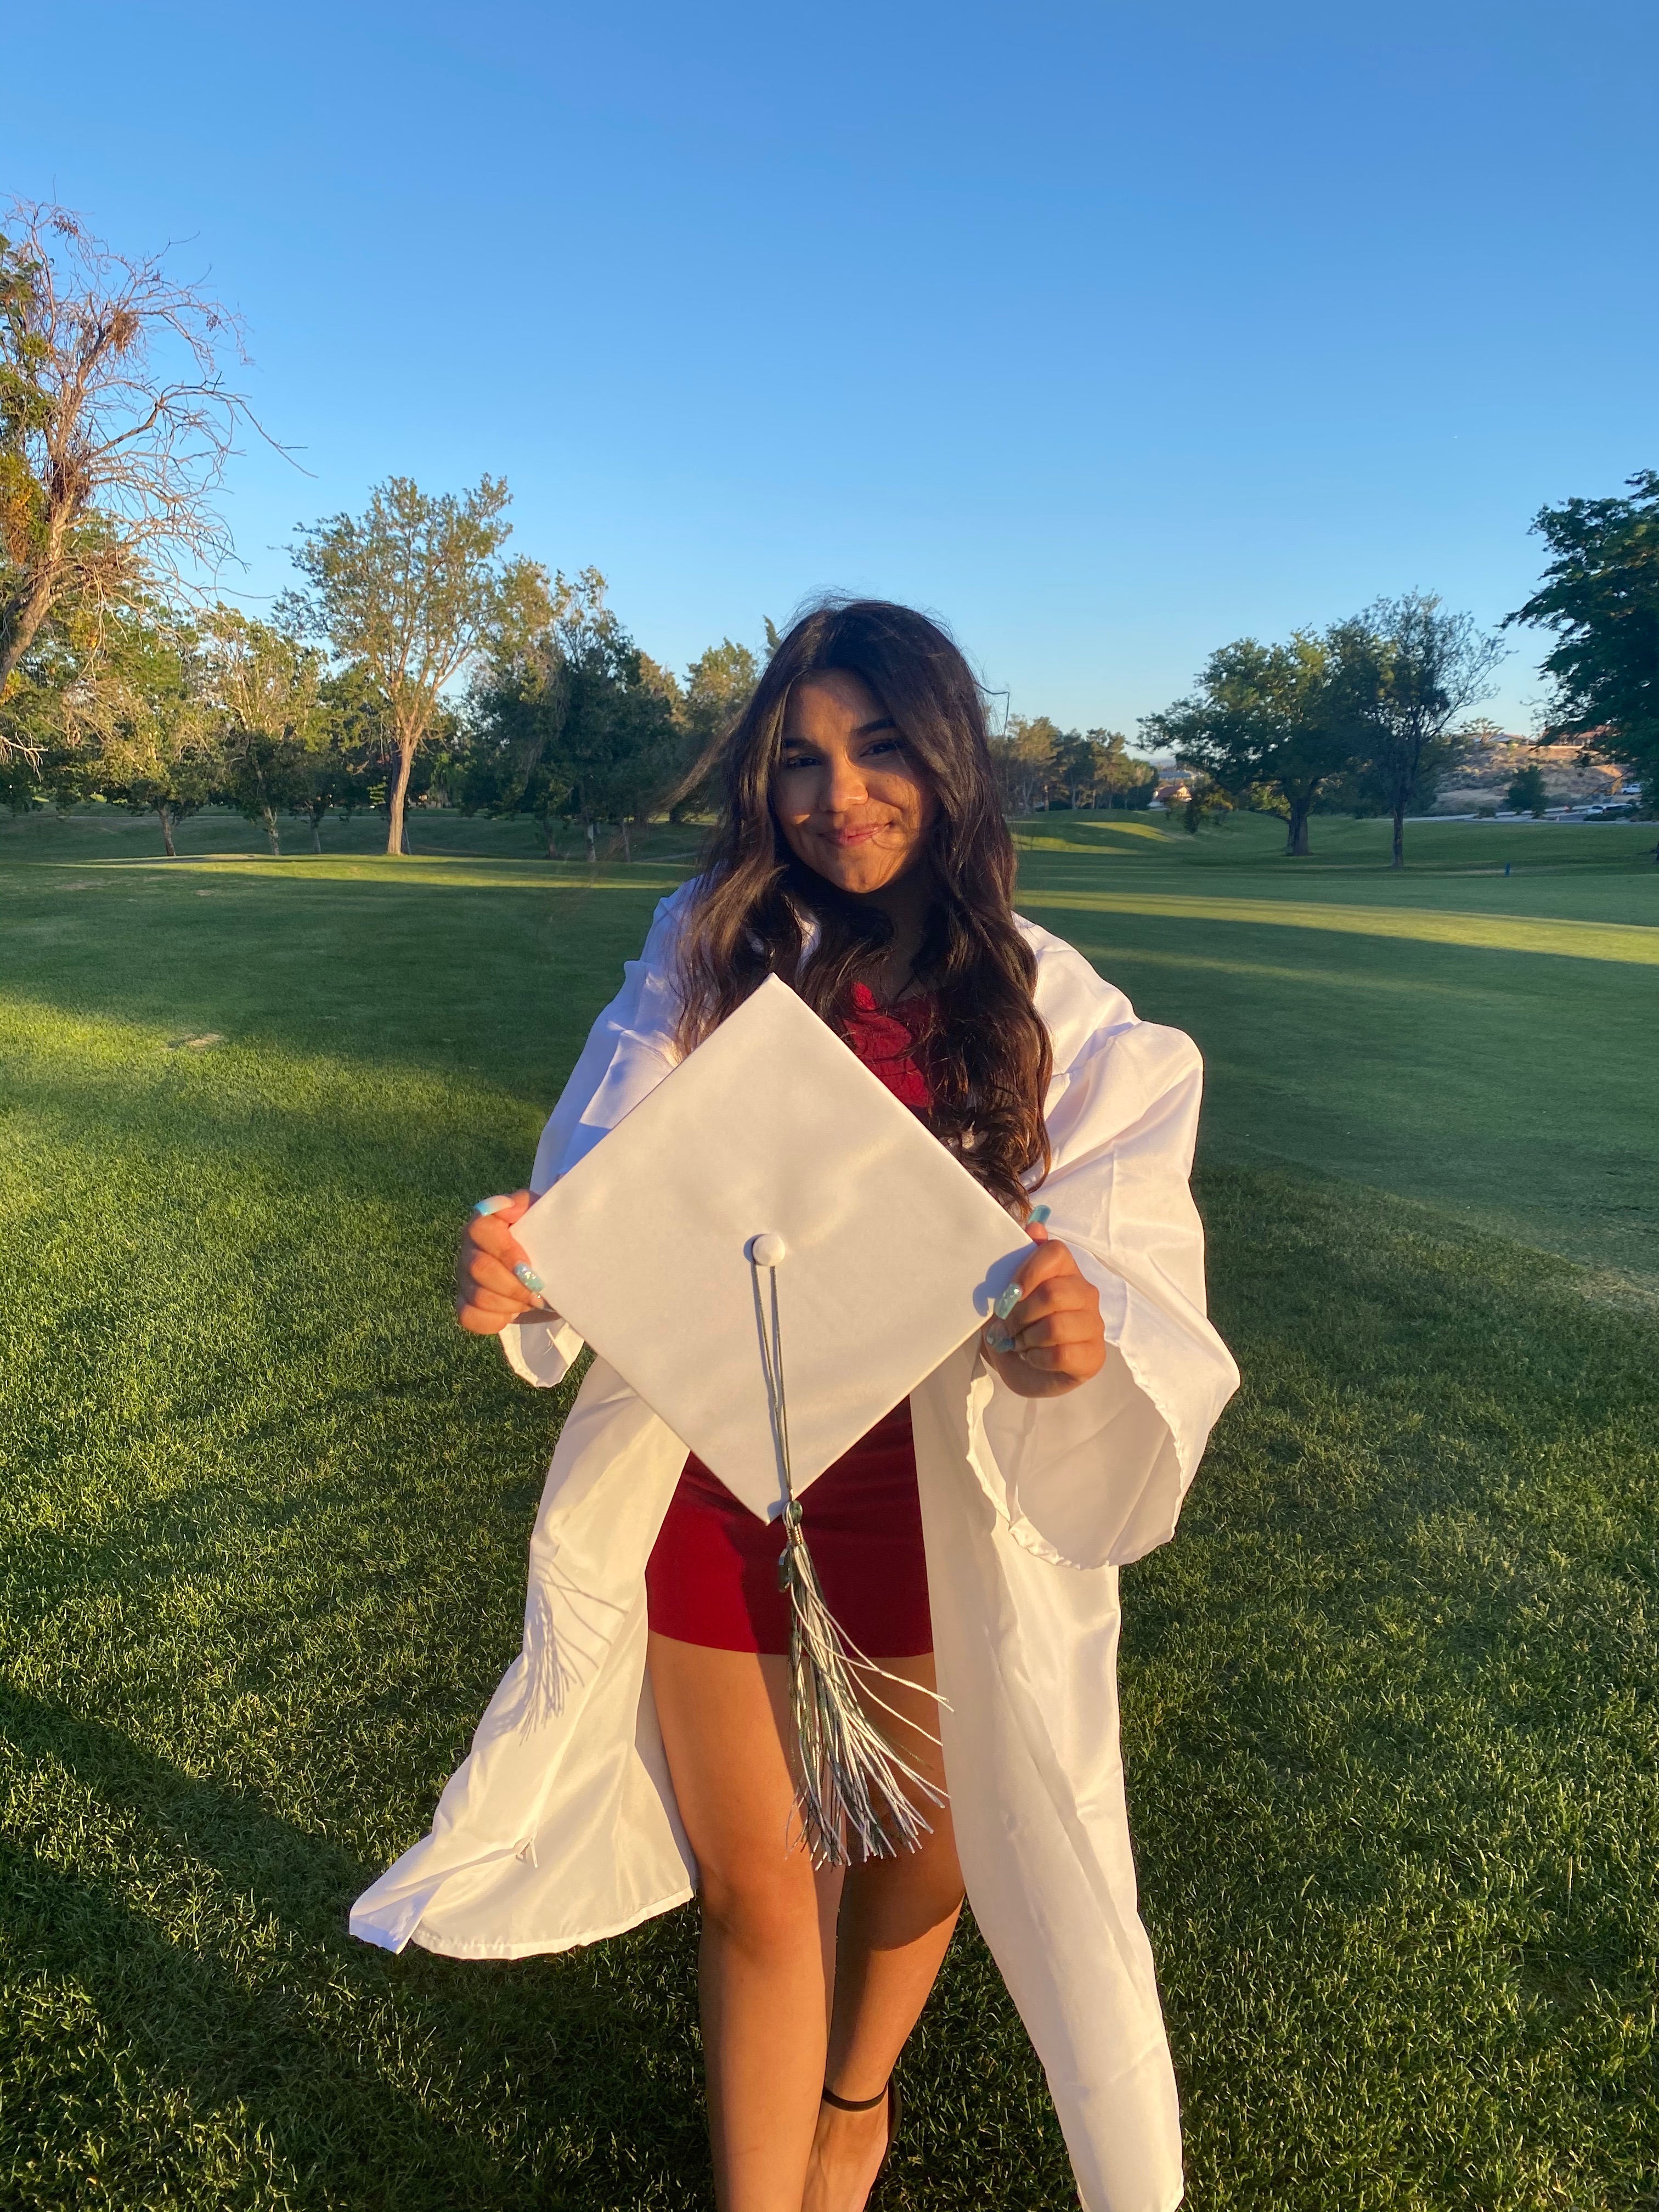 Kasandra Acosta will pick up her diploma via a drive-thru at her high school in Victorville, California. (Courtesy of Katharine Bontuyan)